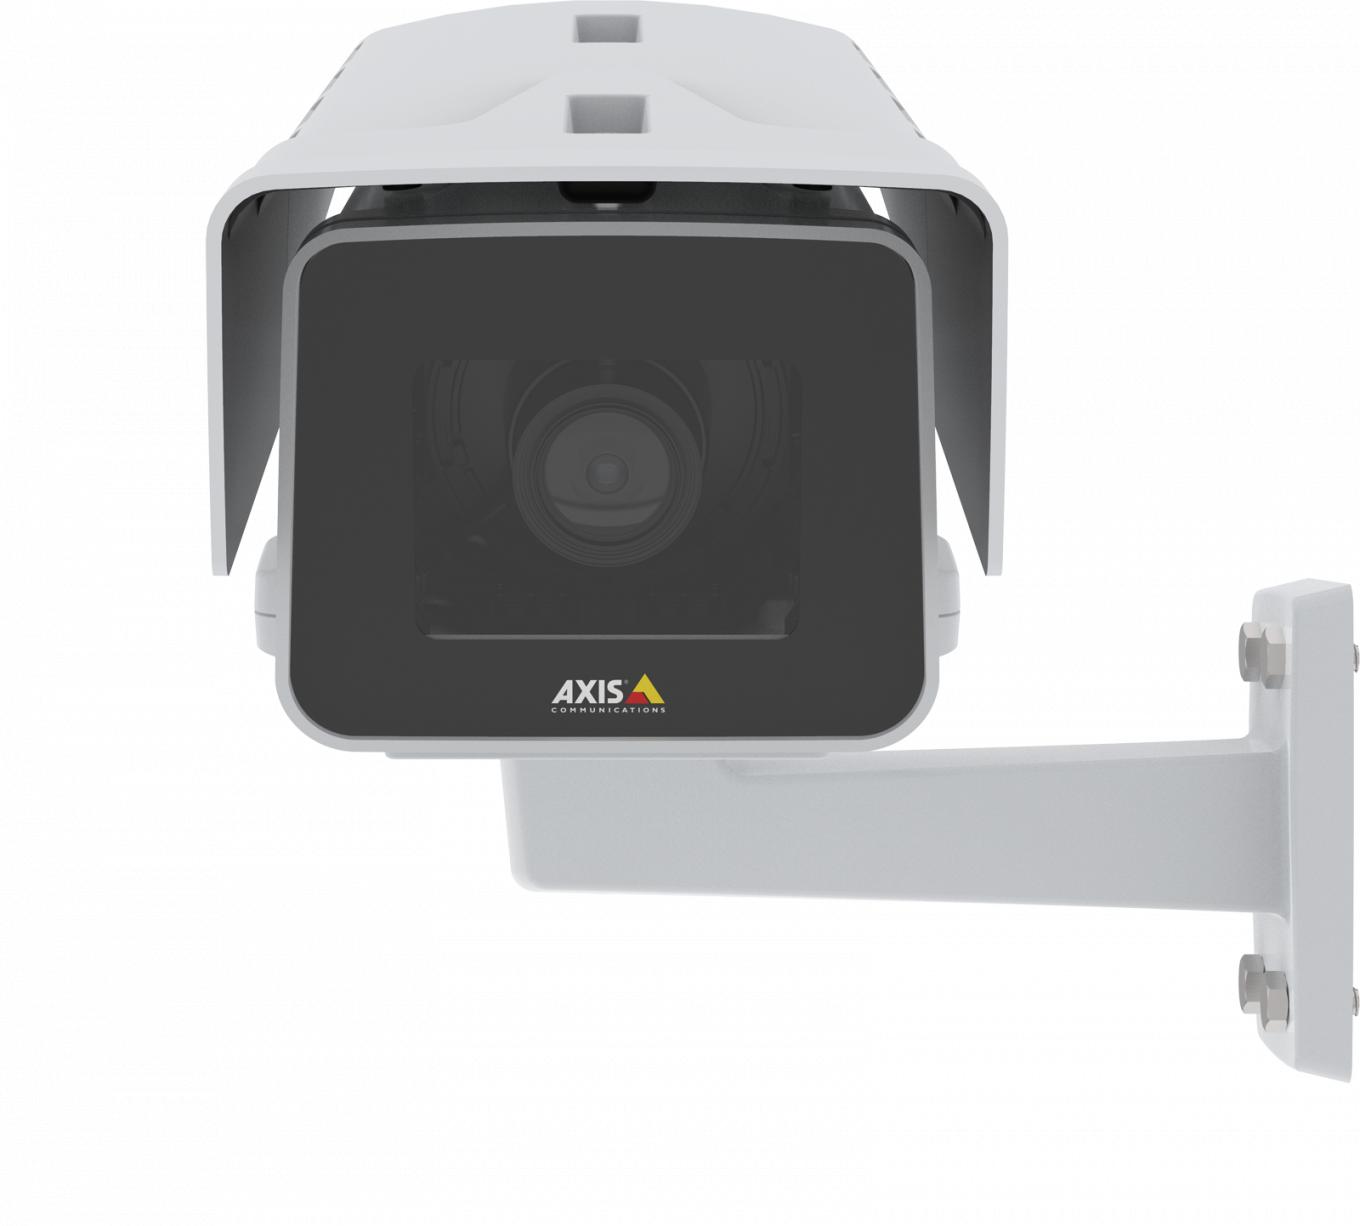 AXIS P1375-E Network Camera | Axis Communications